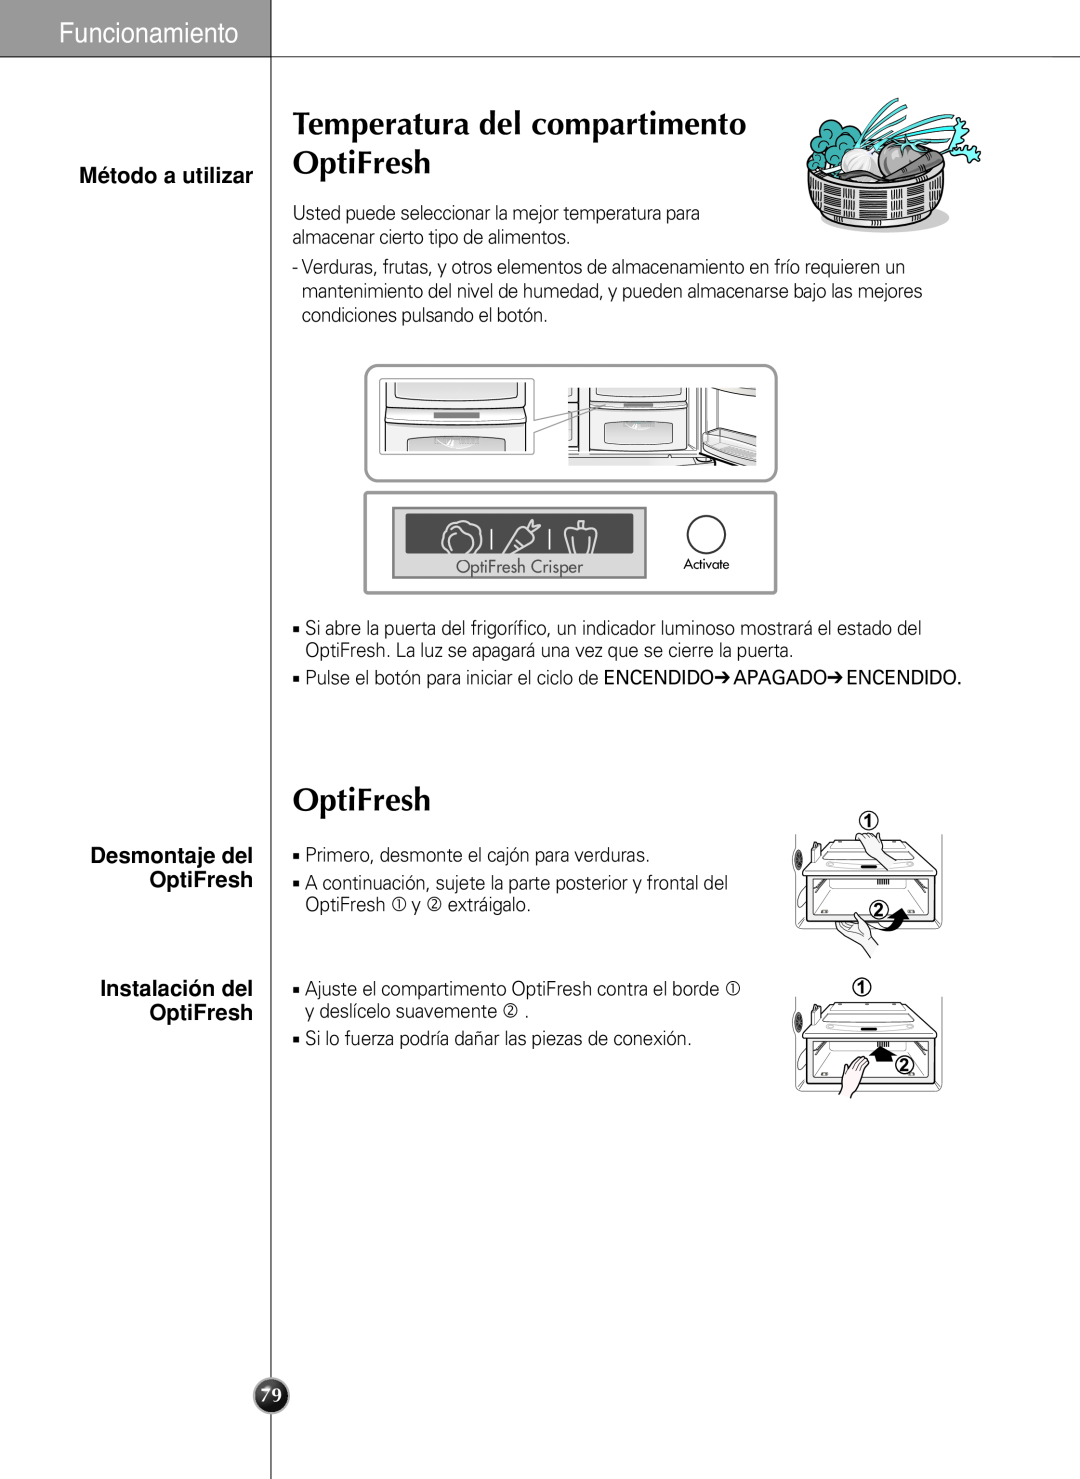 LG Electronics LSC 27960ST manual Temperatura del compartimento, Método a utilizar OptiFresh, Instalación del OptiFresh 